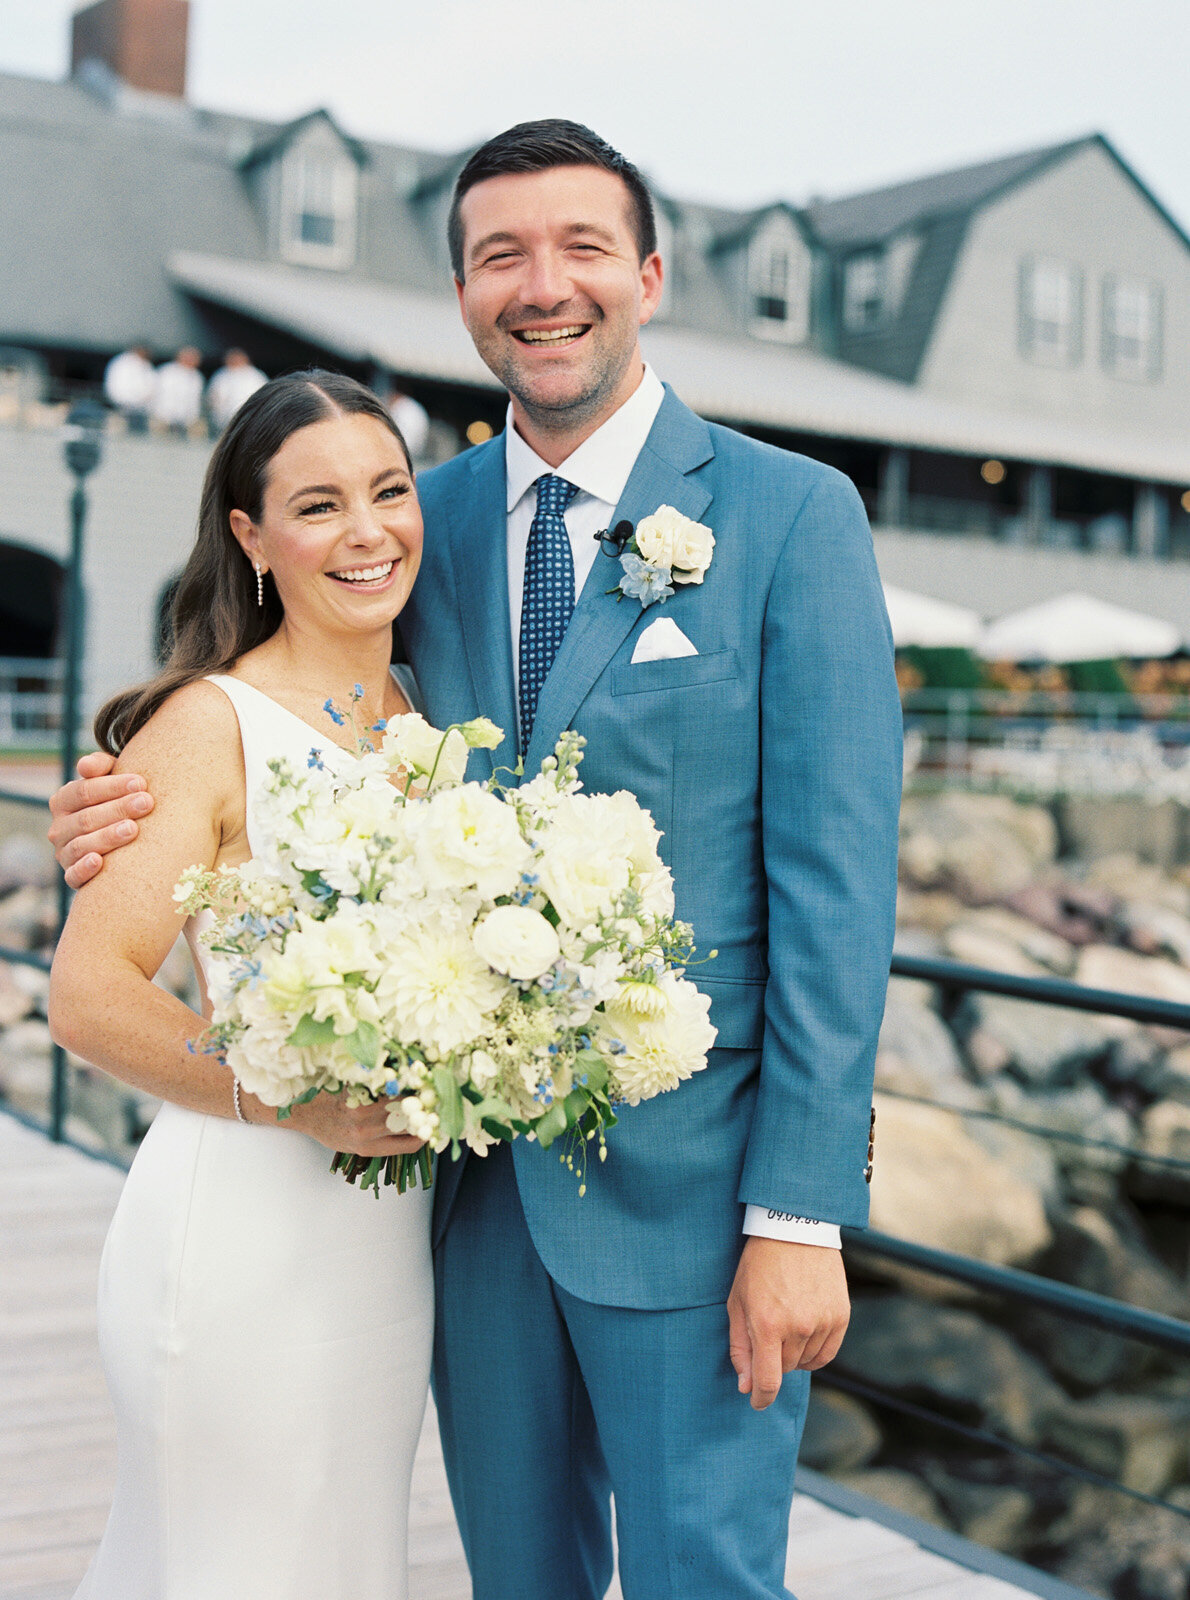 Kate_Murtaugh_Events_New_England_wedding_planner_bride_groom